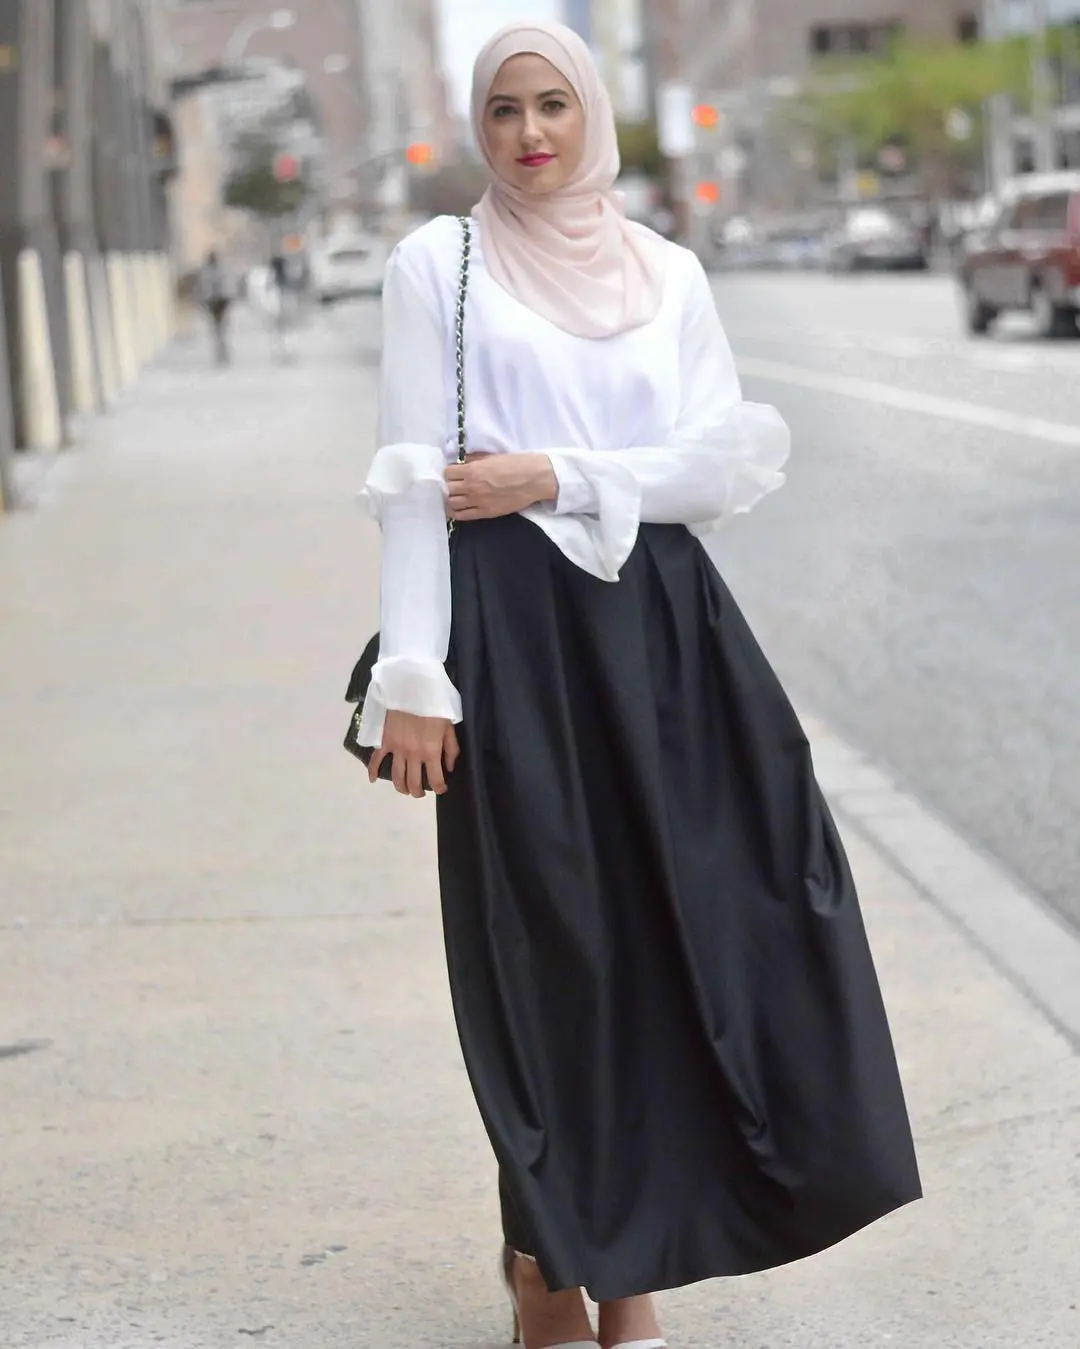 Busana hijab makin modis dengan sentuhan aksen ruffles. (sumber foto: @withloveleena/instagram)